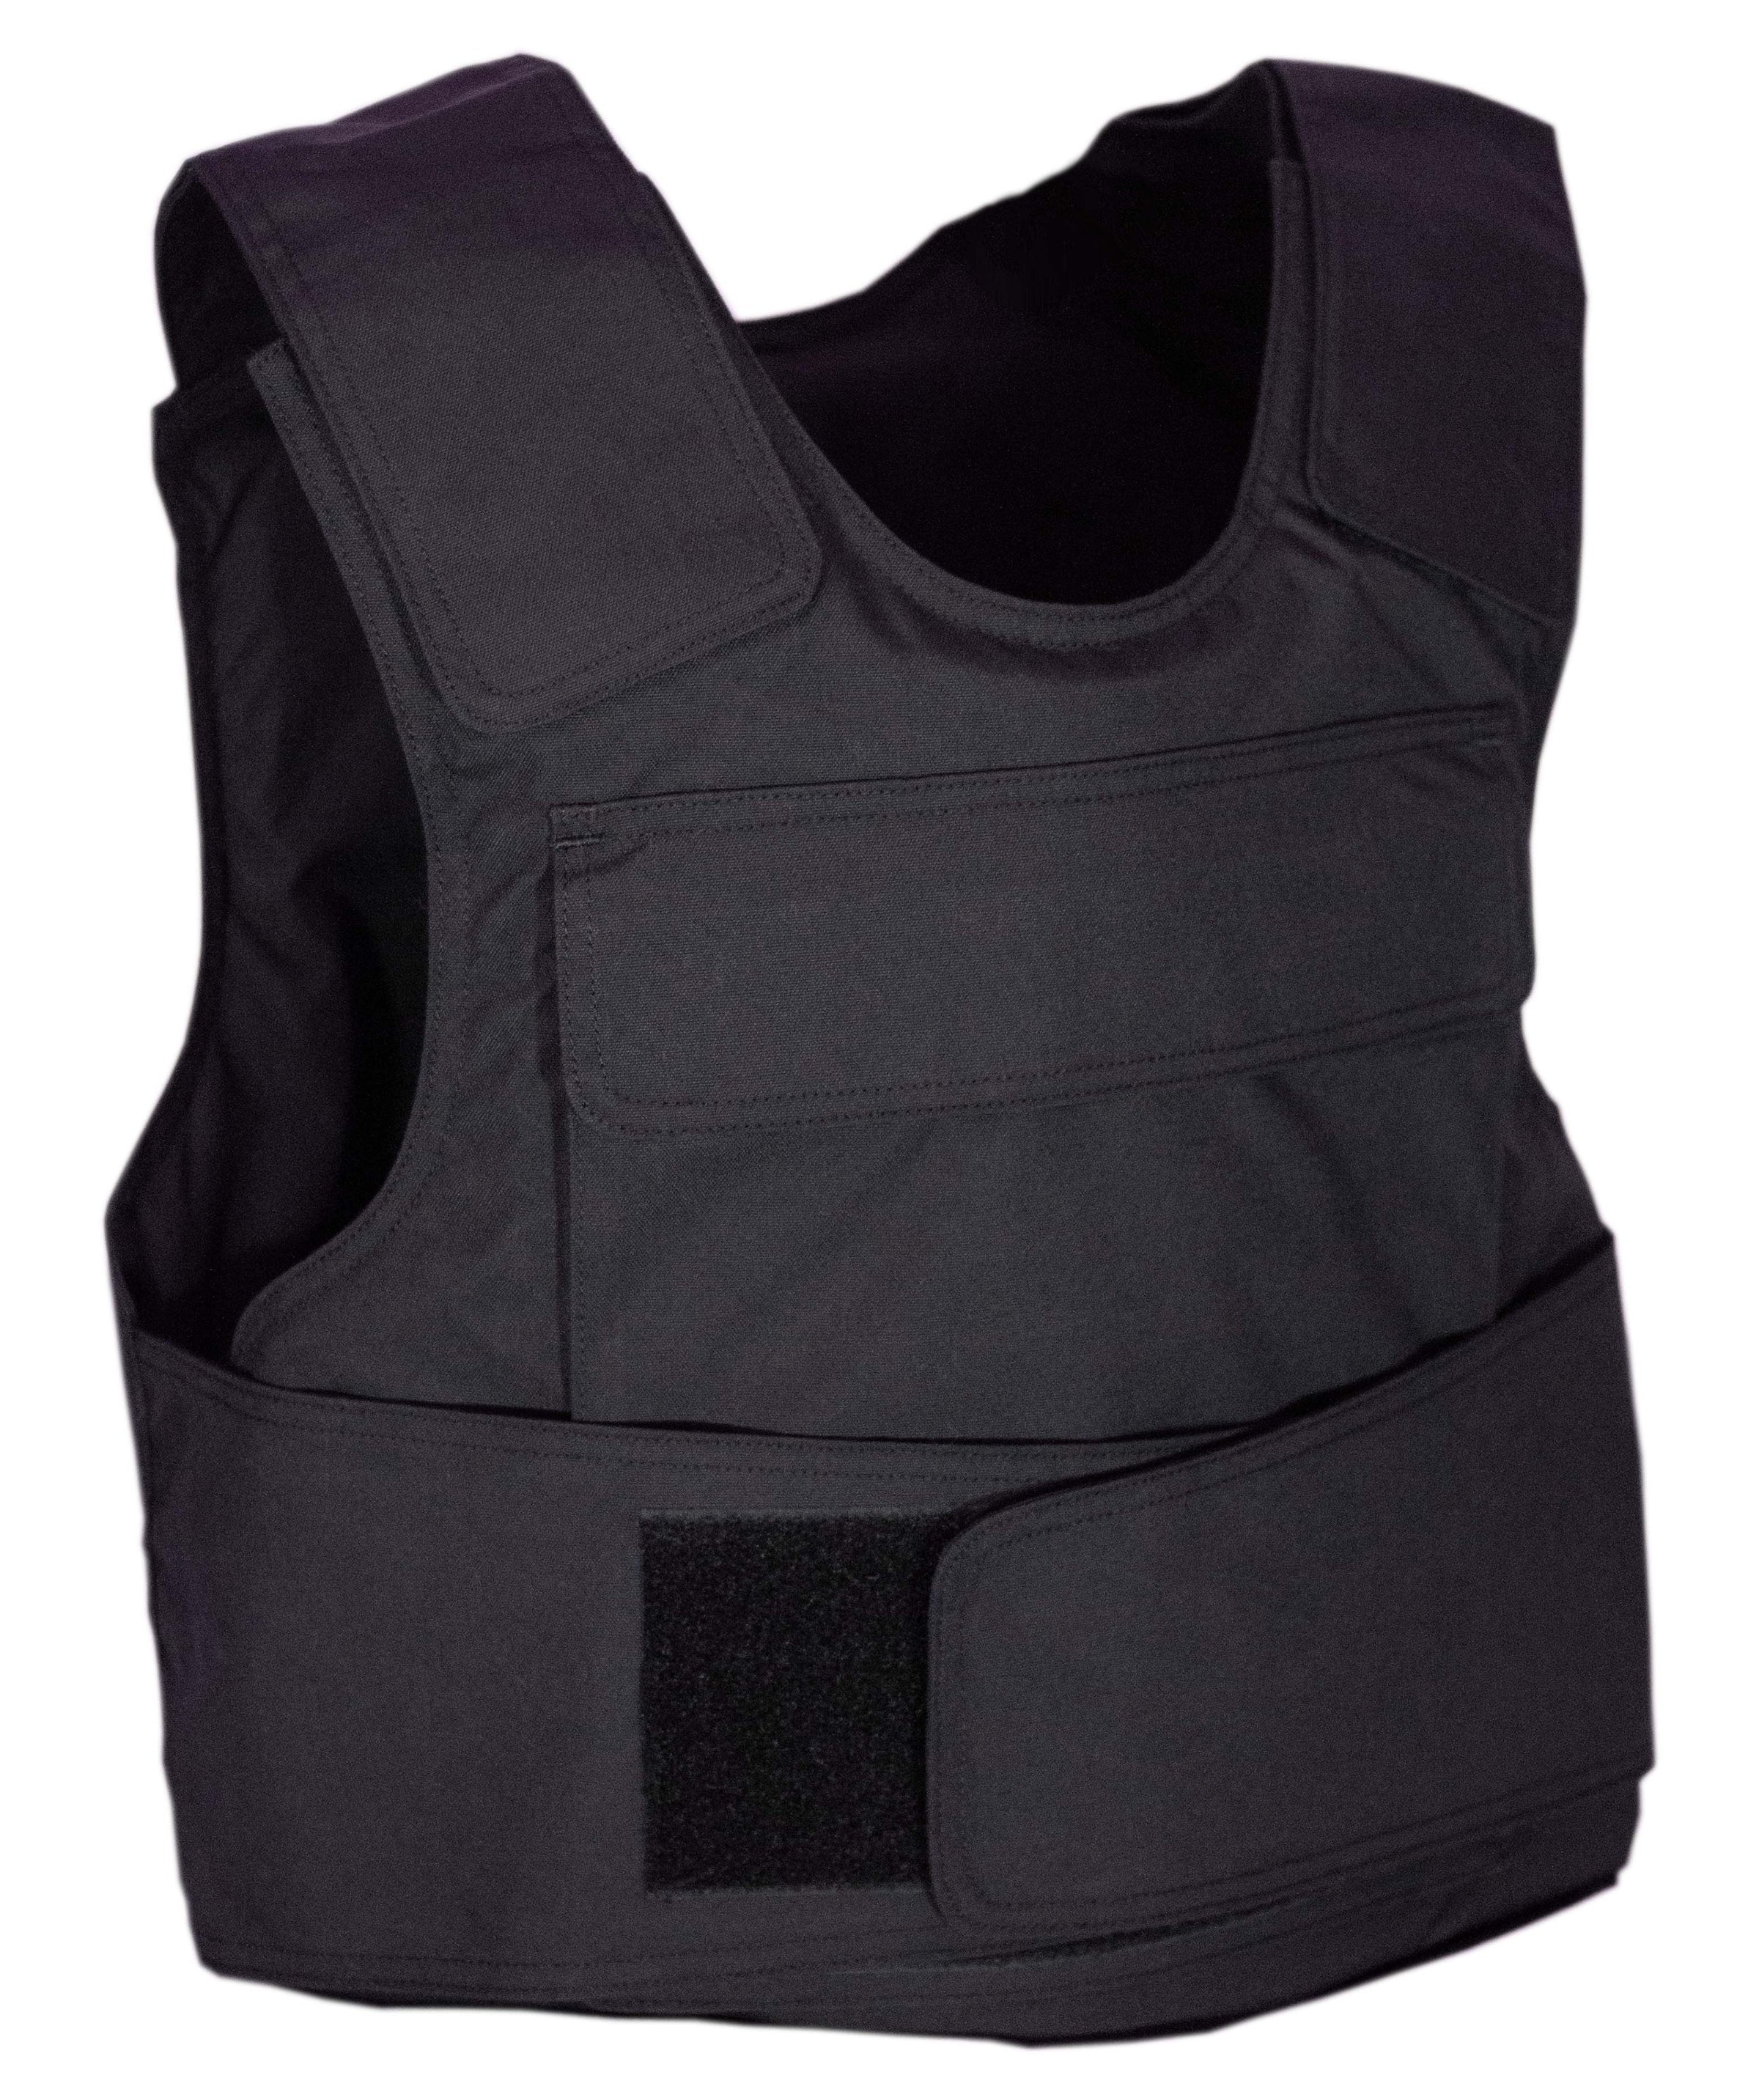 IIIA Bulletproof Vest 3A Level Lightweight Security Antibullet Self-defense  Suit